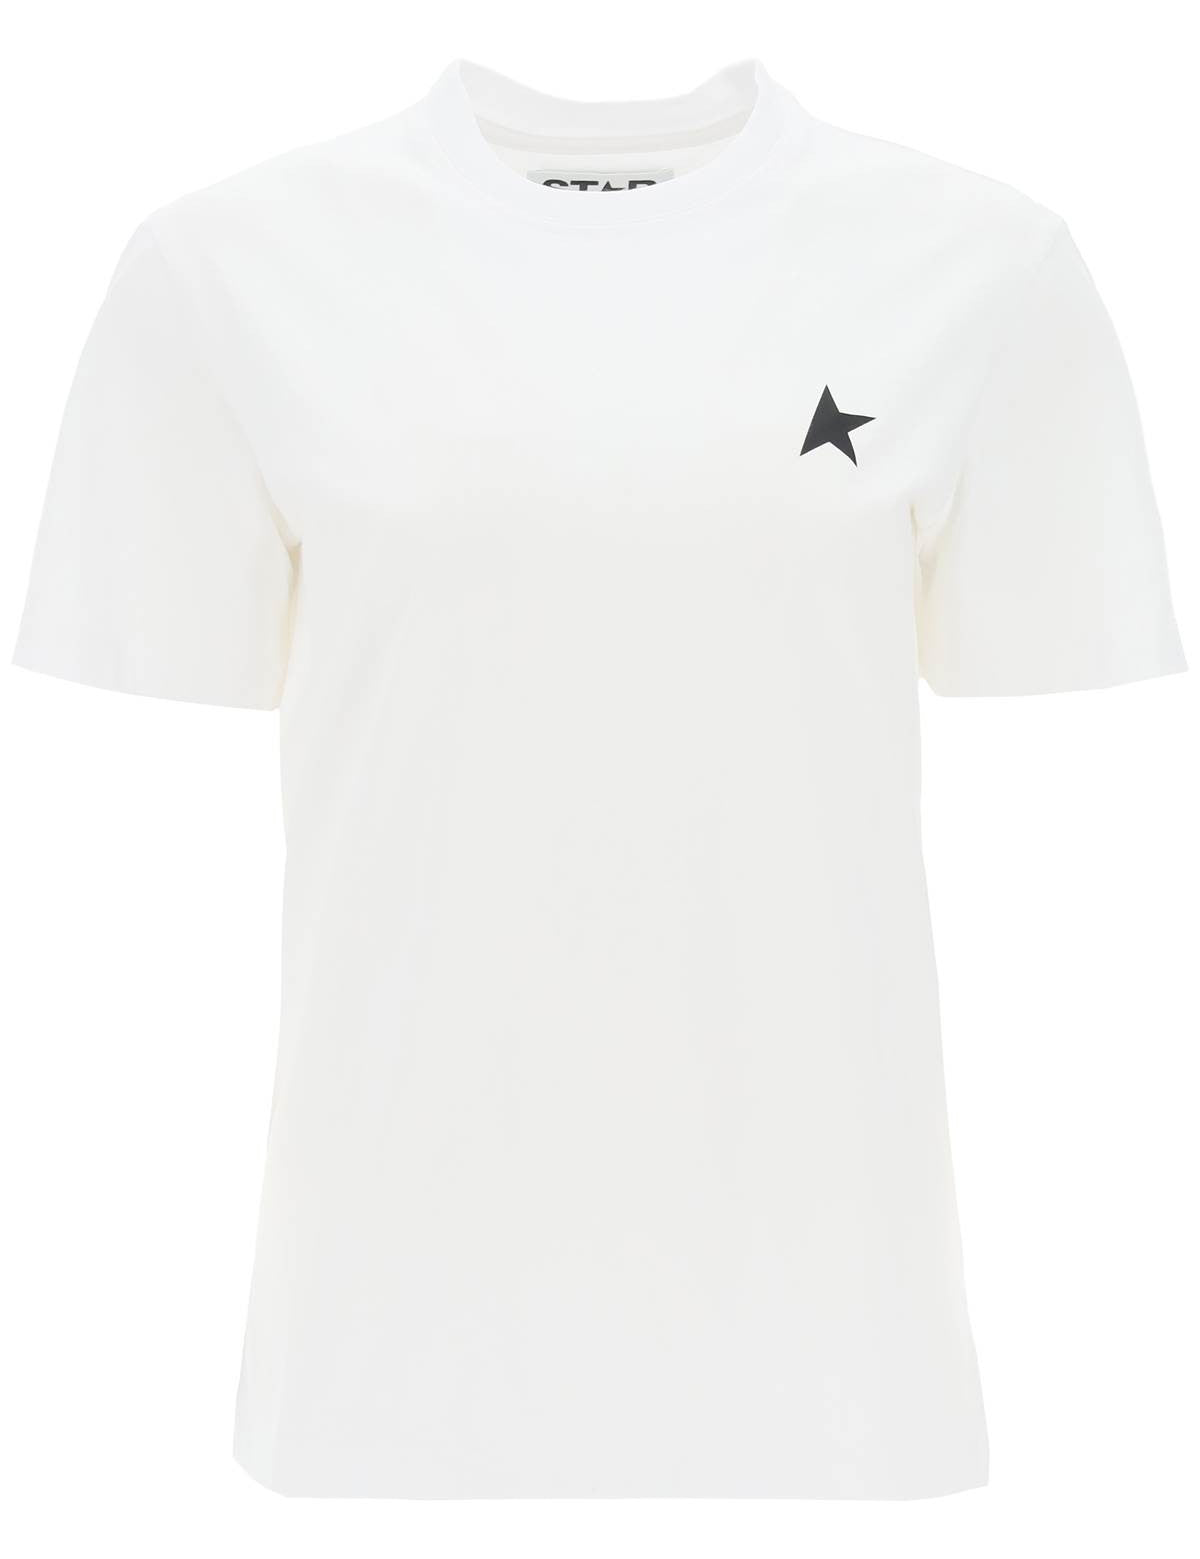 golden-goose-regular-t-shirt-with-star-logo.jpg